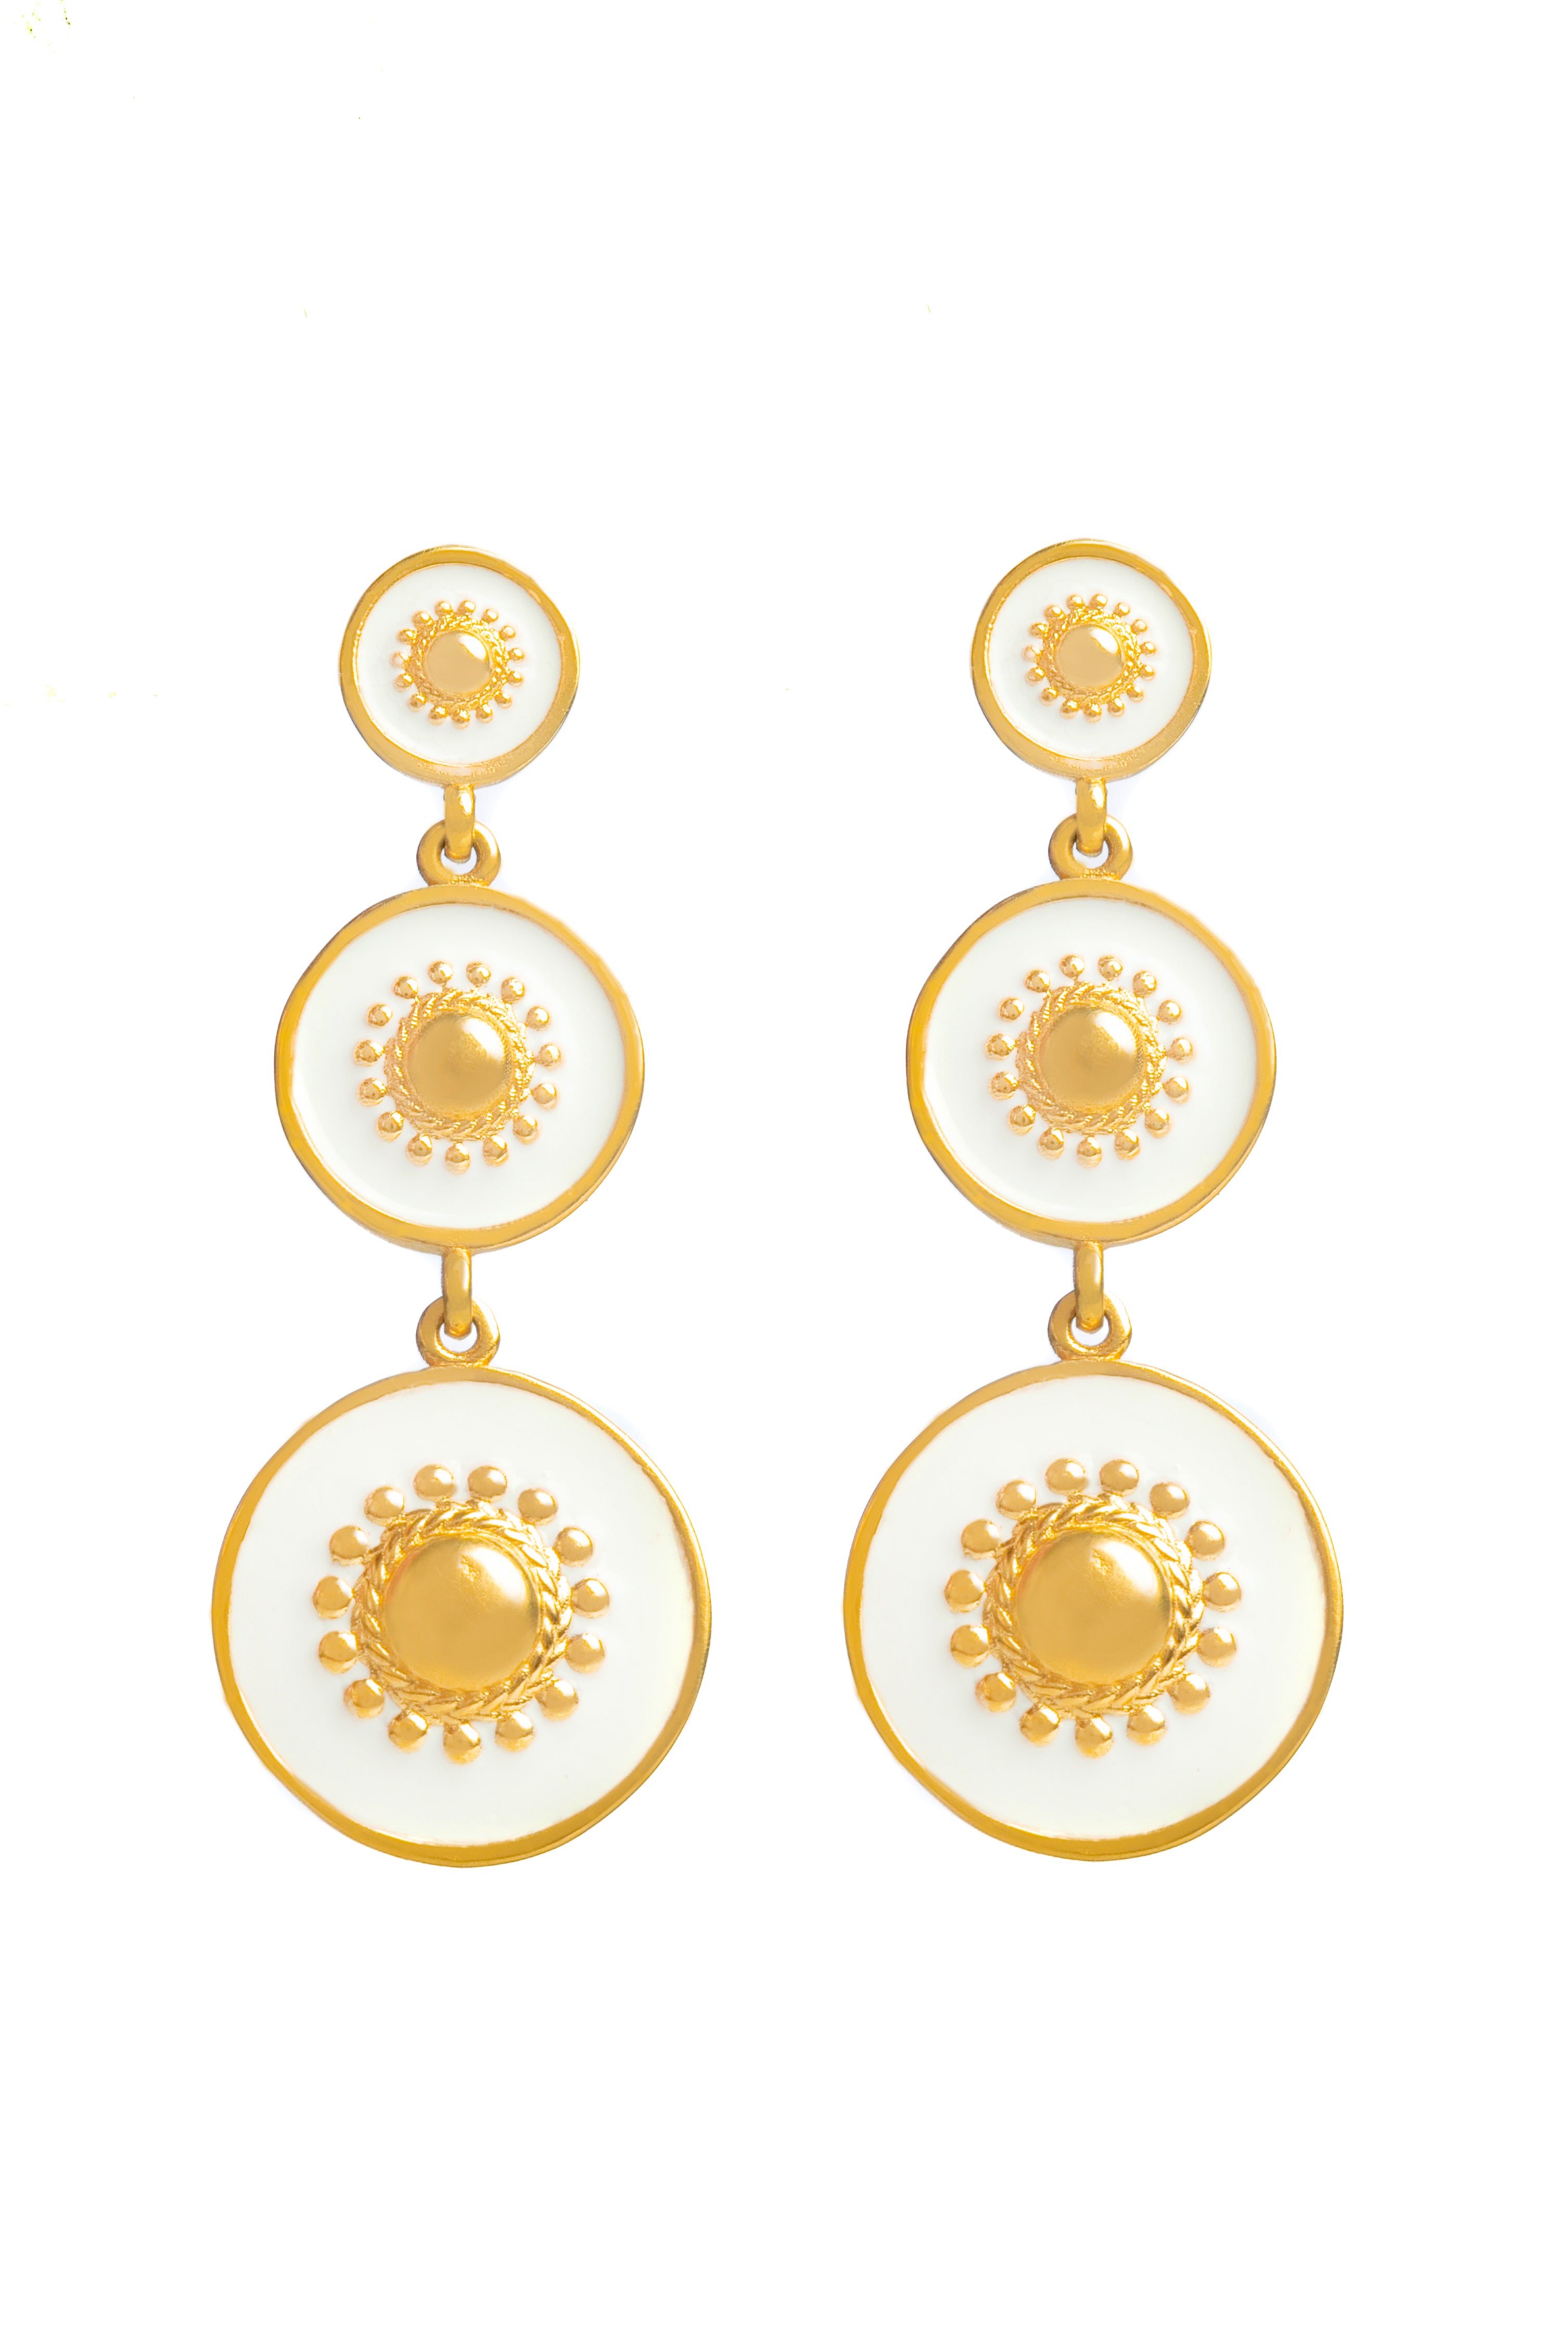 thaleia-earrings-silver925